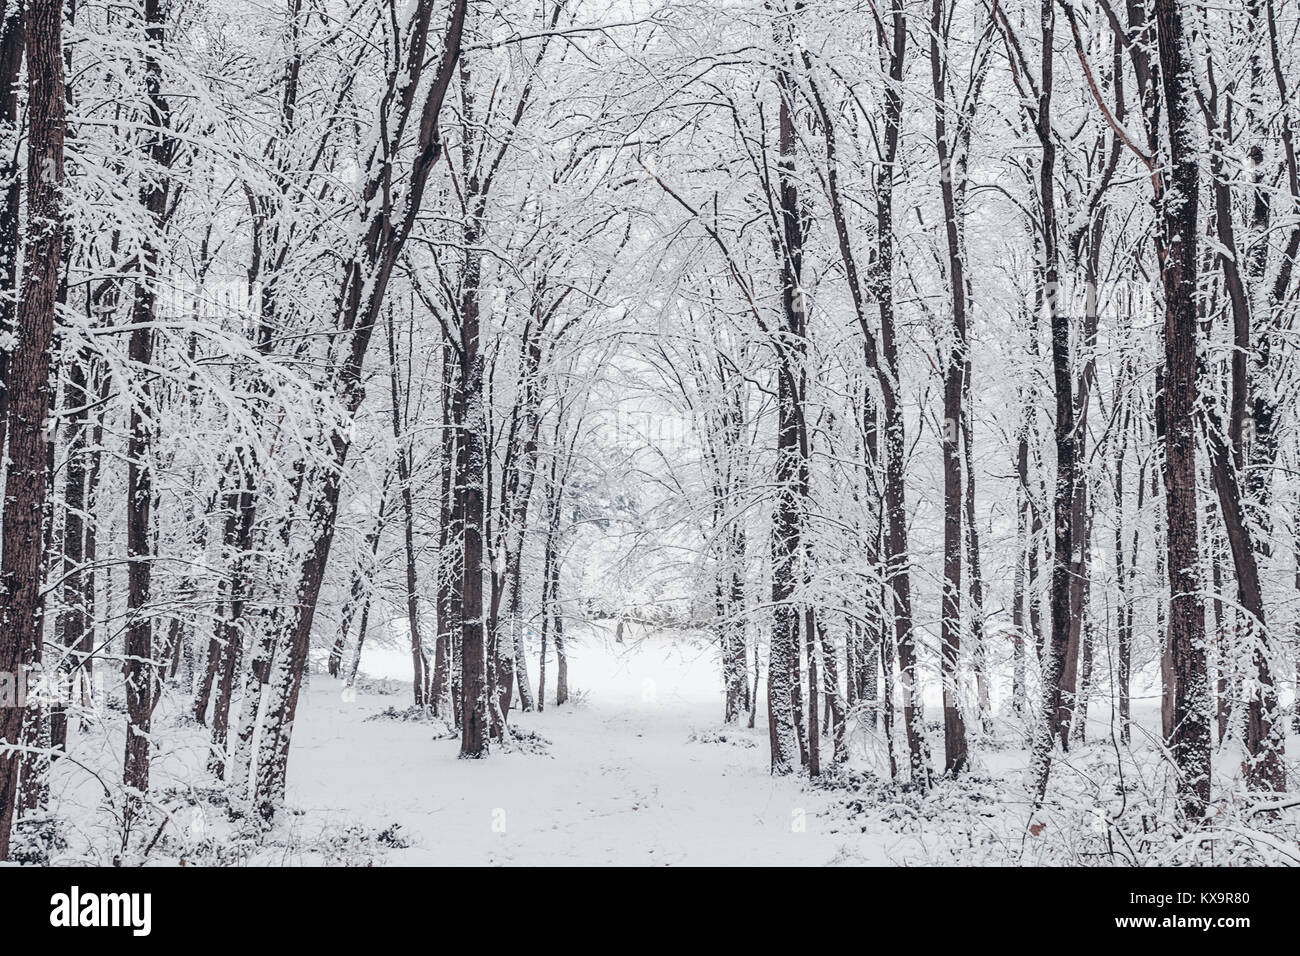 Winter forest frozen trees. Winter landscape in snowy forest. Stock Photo